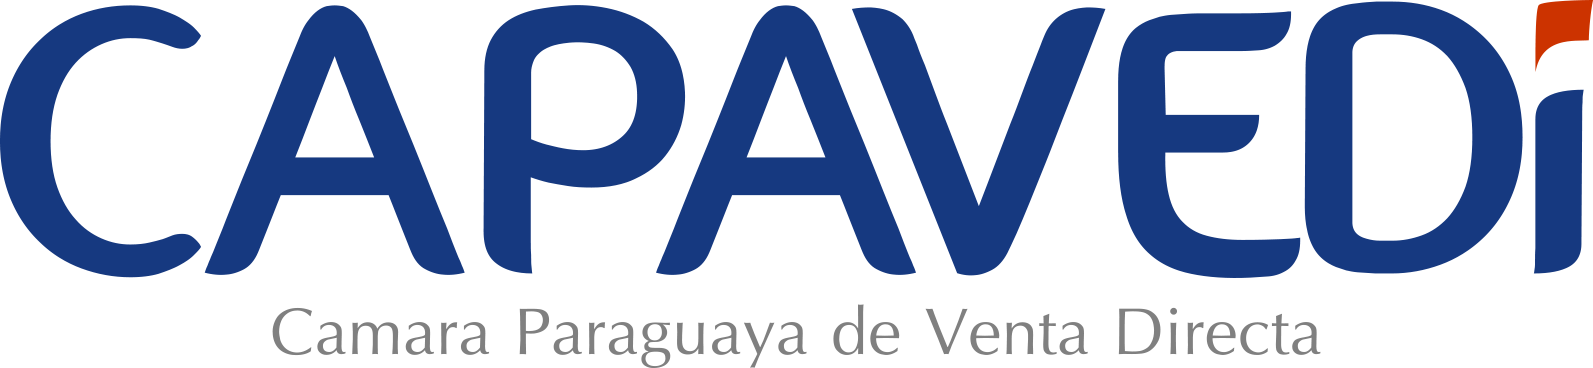 Capadevi Logo